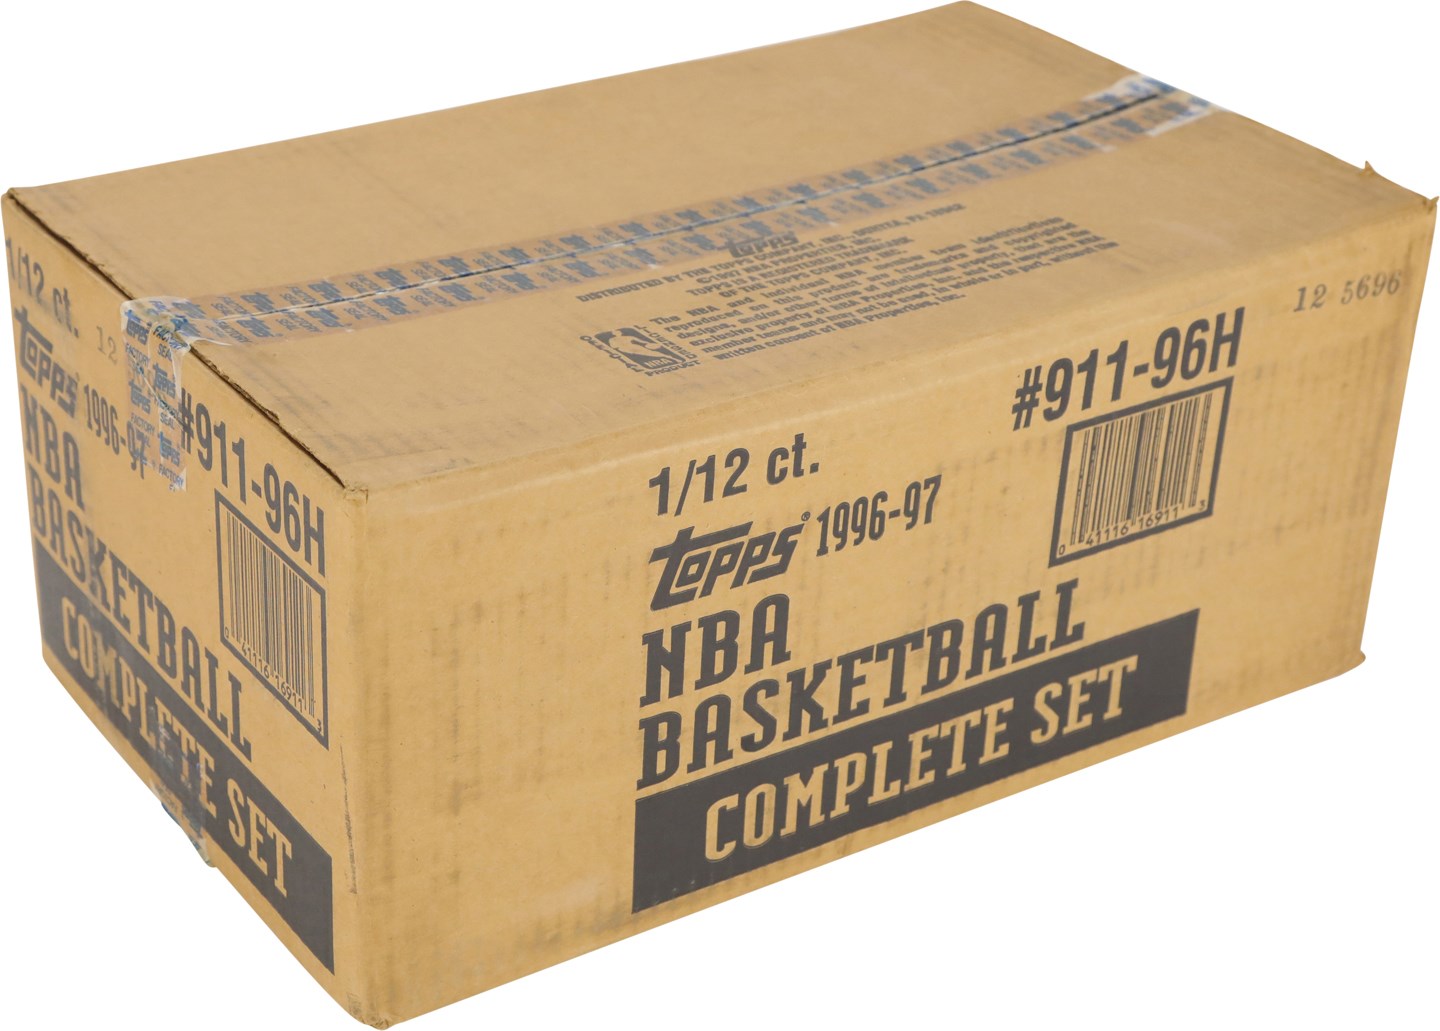 - 1996-1997 Topps Basketball Sealed Set Case (1)